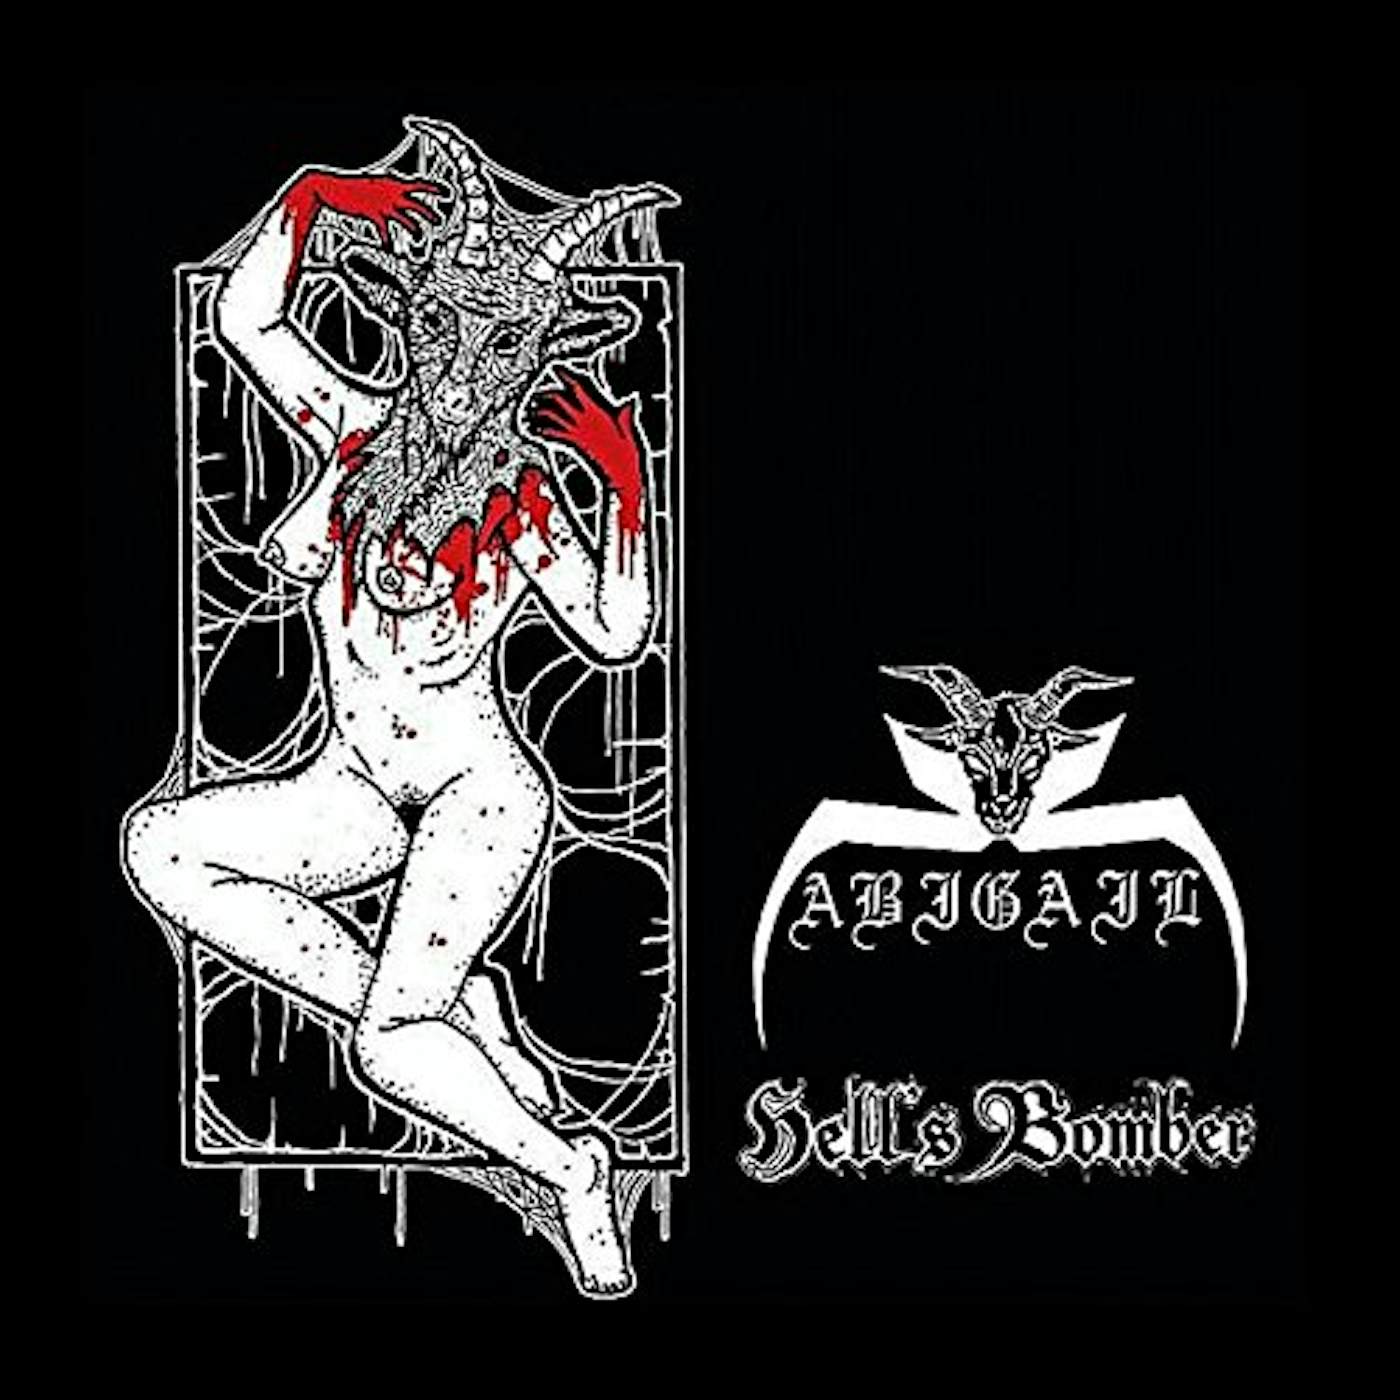 ABIGAIL / HELLS BOMBER ALCOHOL SLUTS & SATAN TIL DEATH Vinyl Record